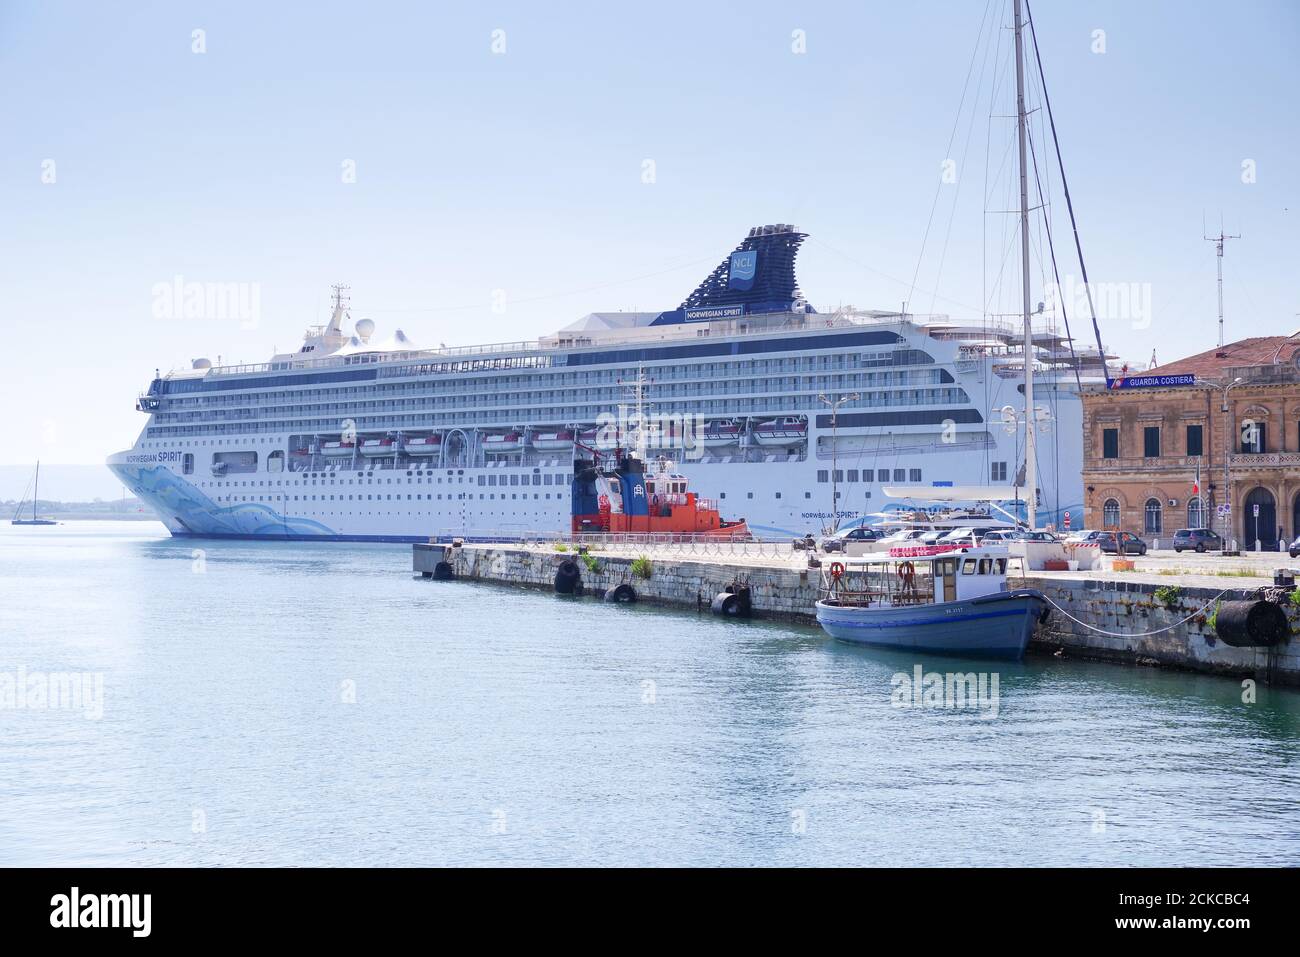 Cruise ship docked in Ortygia, Sicily (Italy) Stock Photo